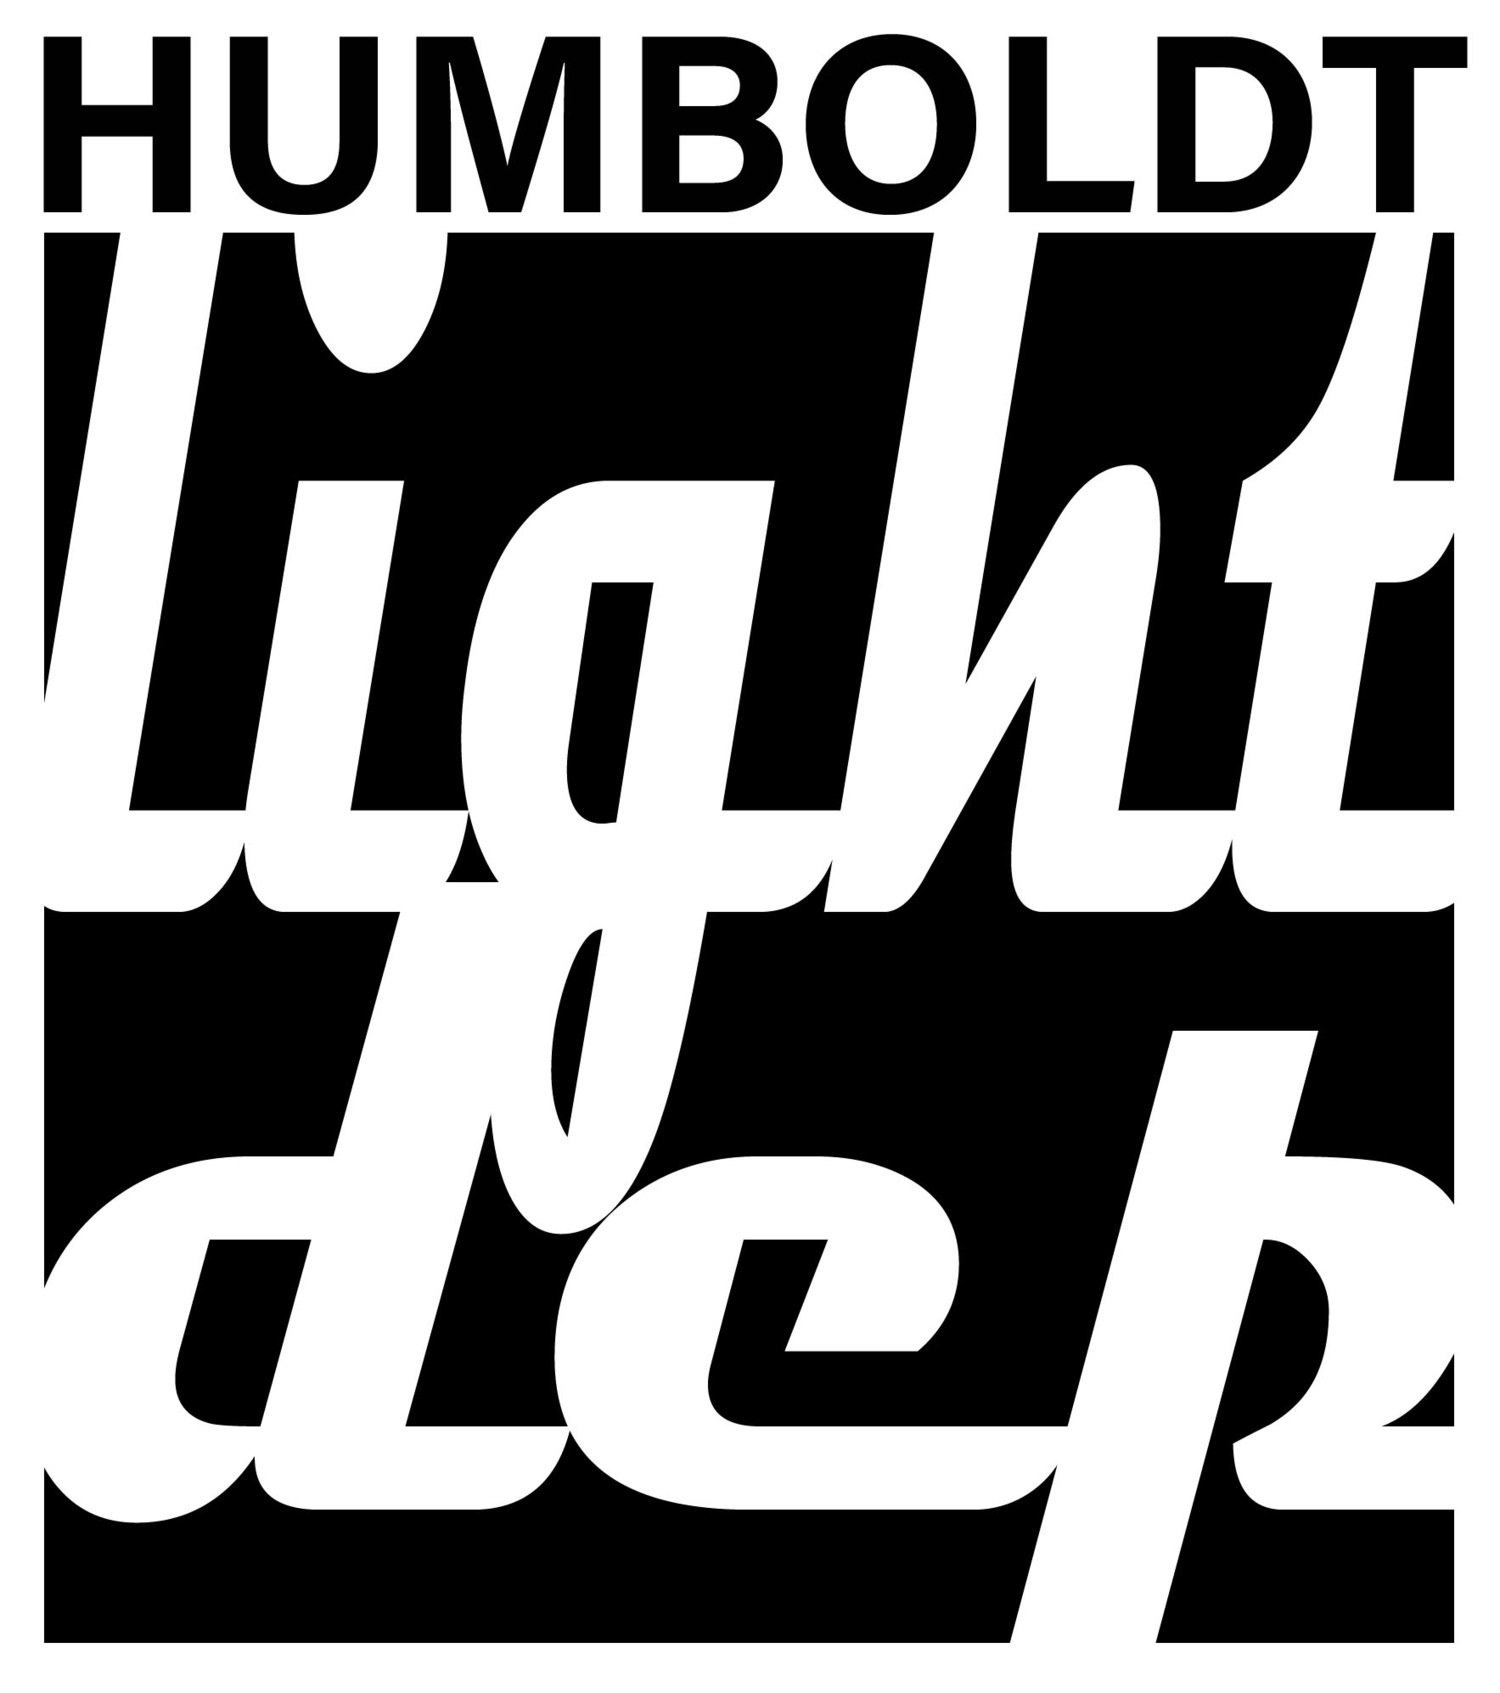 www.humboldtlightdep.com